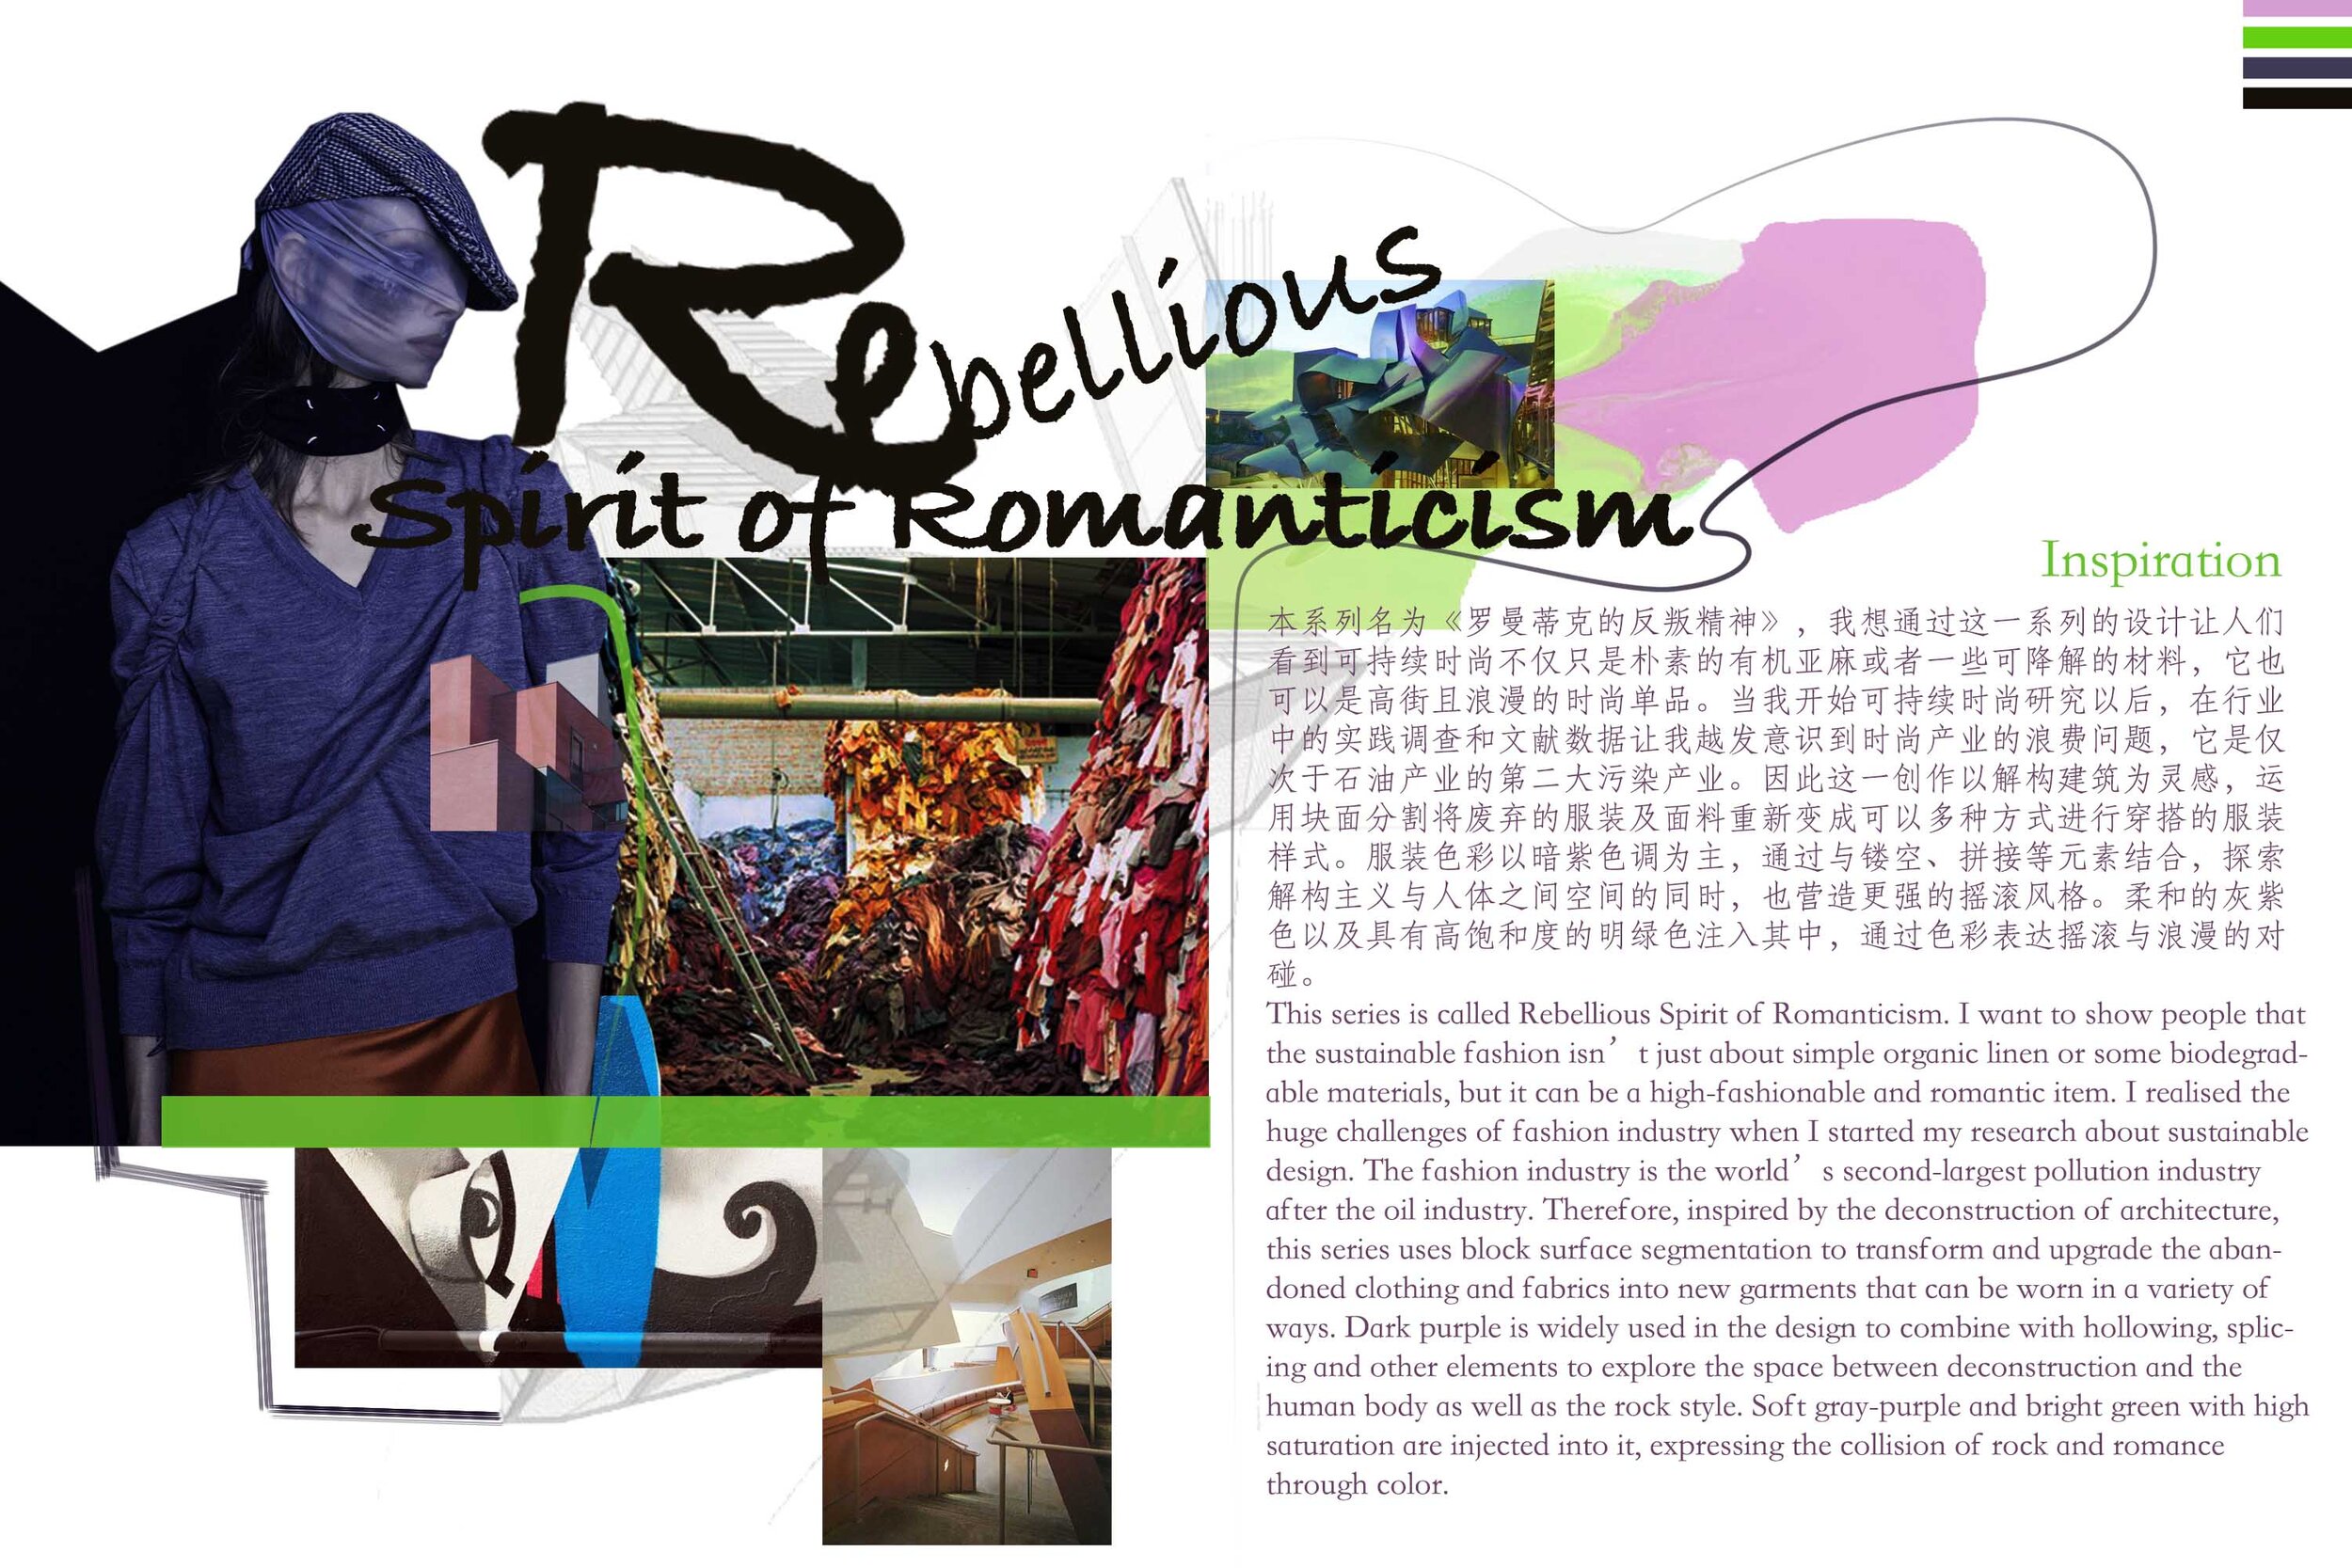 MB1-Liu Jing-Rebellious Spirit of Romanticism - Chuanfeng LIu.jpg